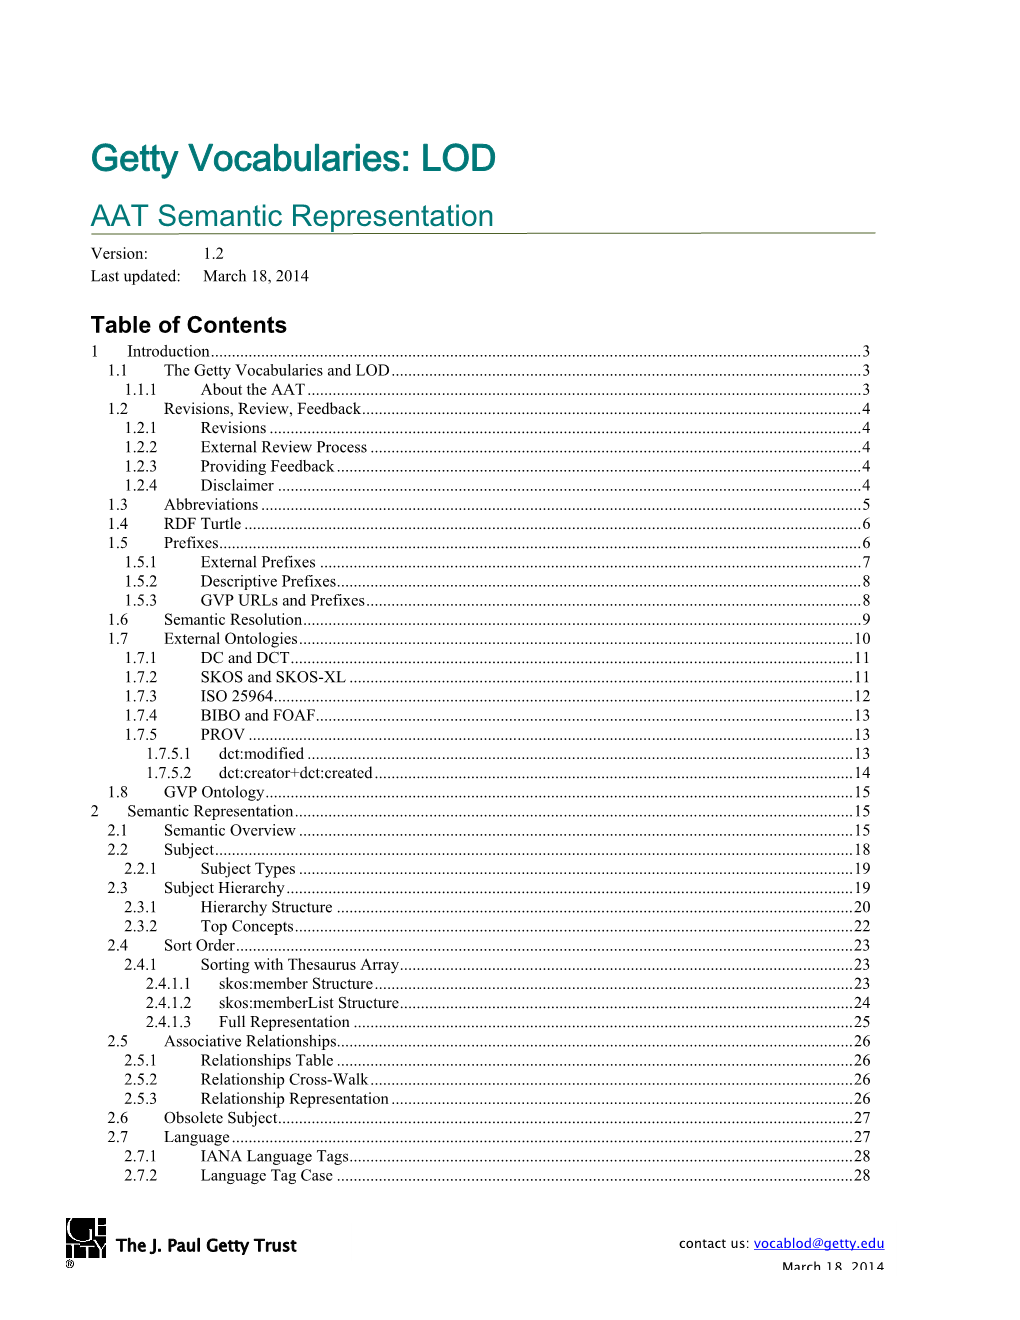 Getty Vocabularies: LOD AAT Semantic Representation Version: 1.2 Last Updated: March 18, 2014